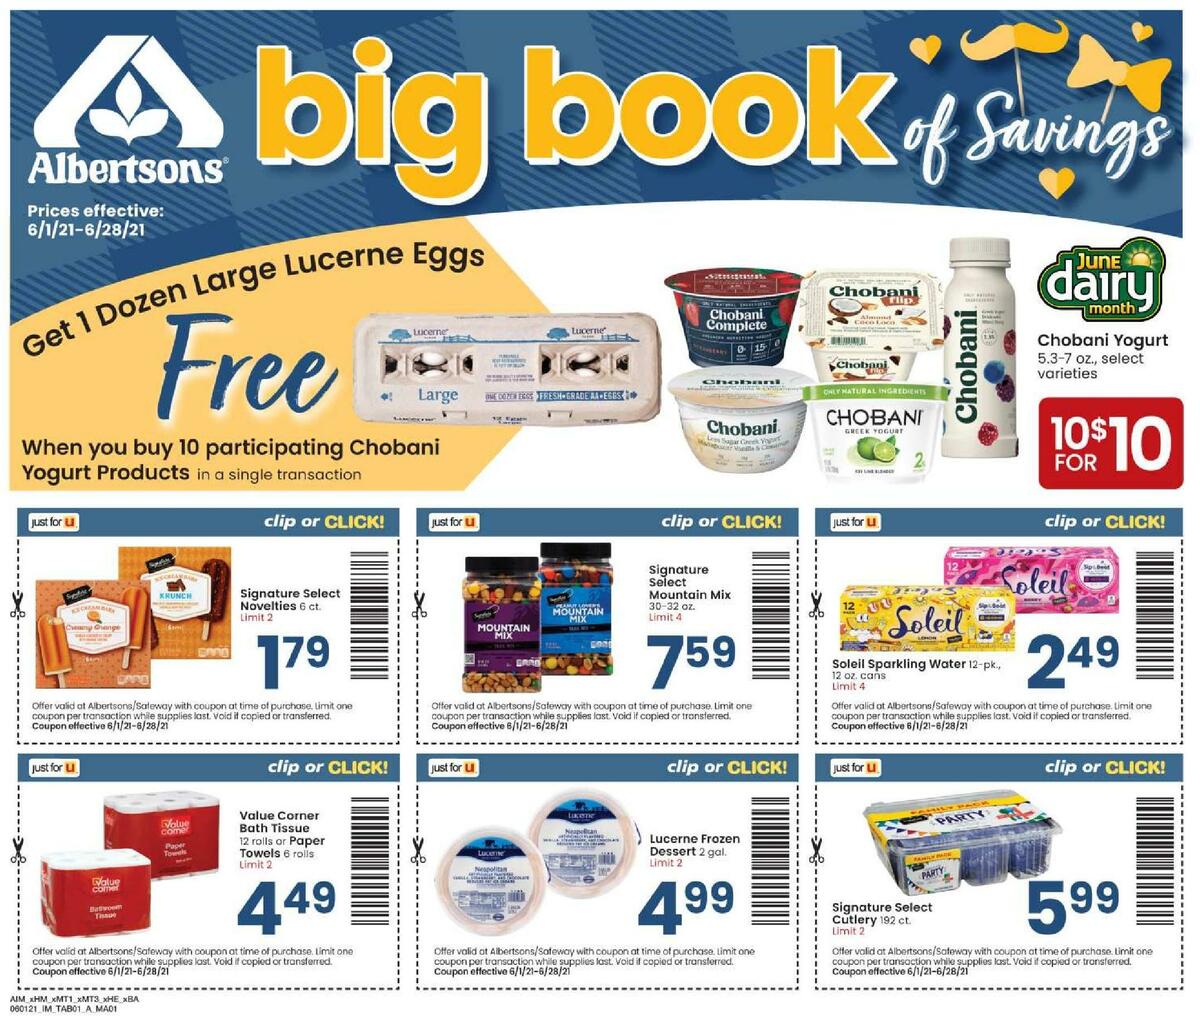 Albertsons Big Book of Savings Weekly Ad from June 1